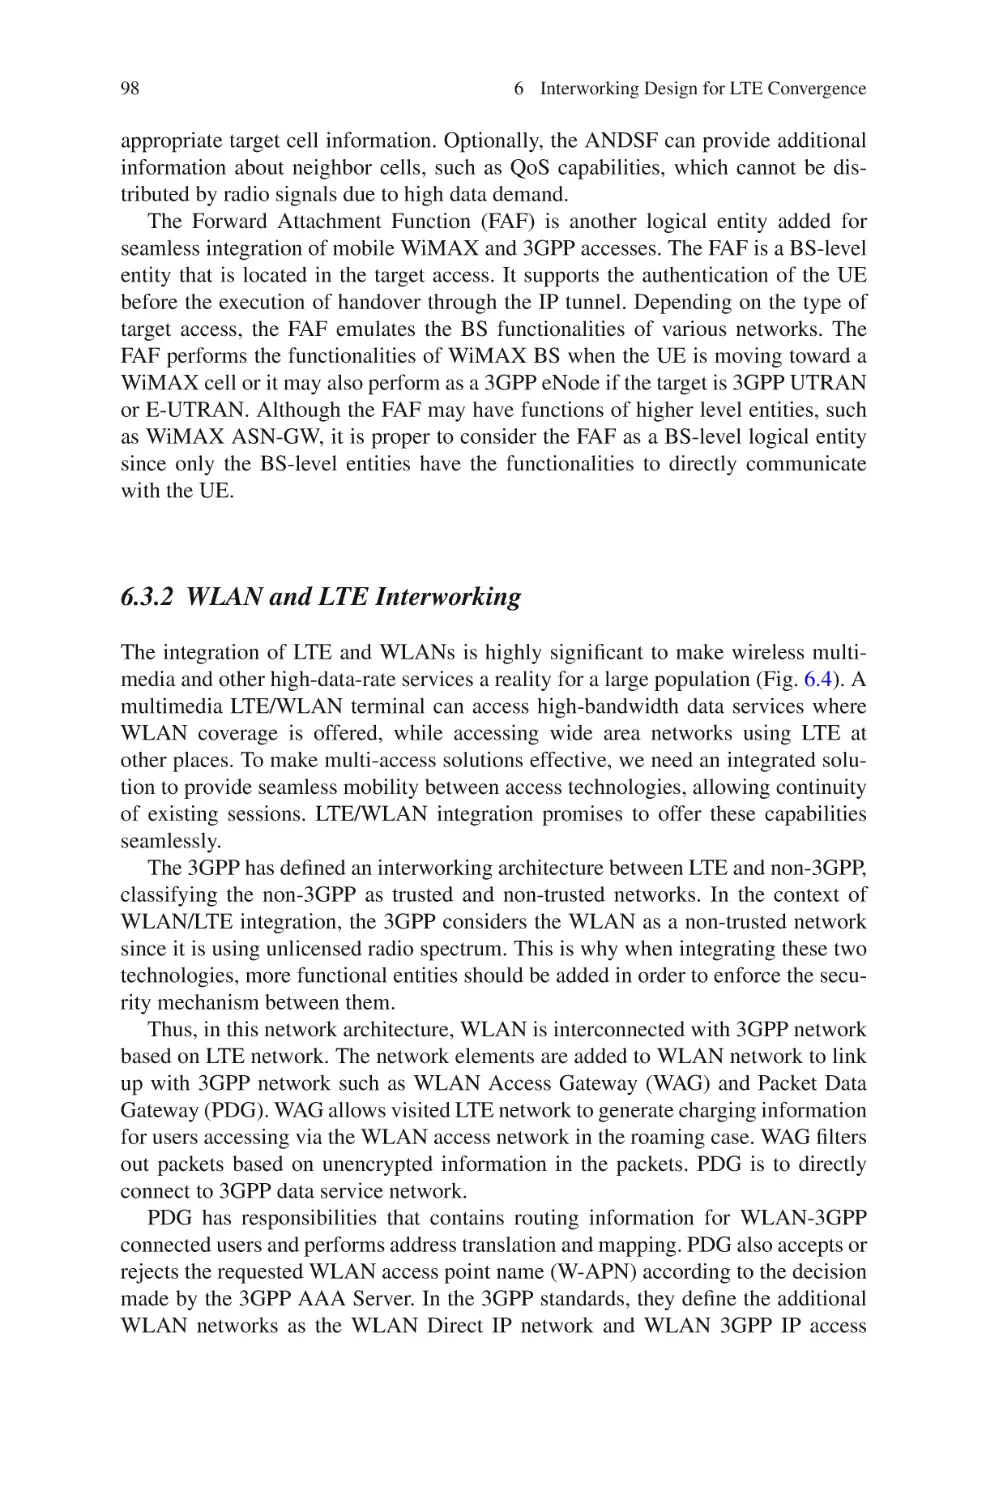 6.3.2  WLAN and LTE Interworking